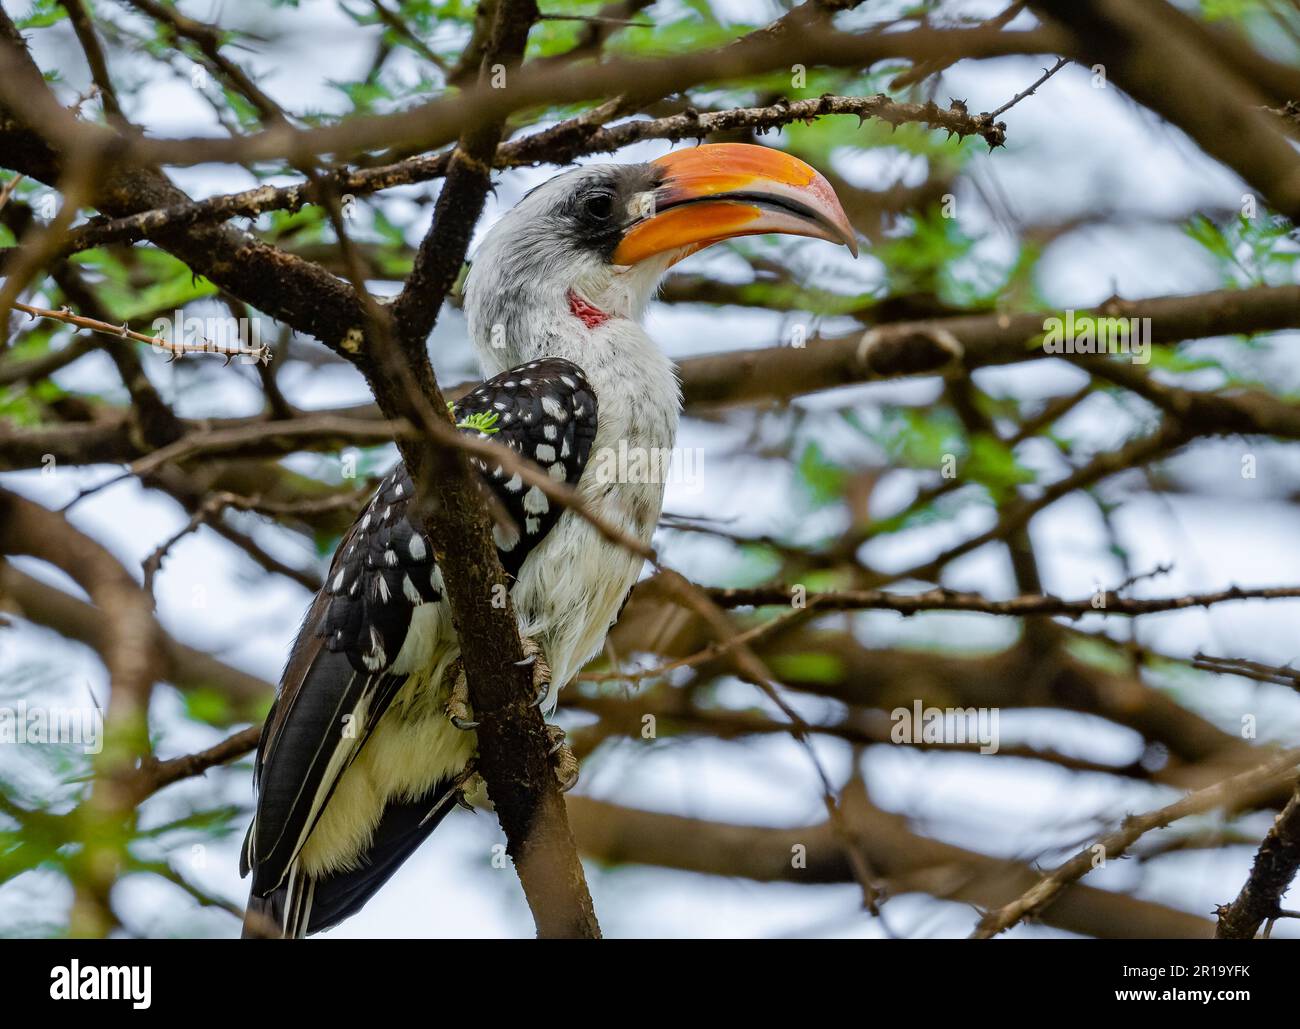 A Jackson's Hornbill (Tockus jacksoni) perched on a branch. Kenya, Africa. Stock Photo